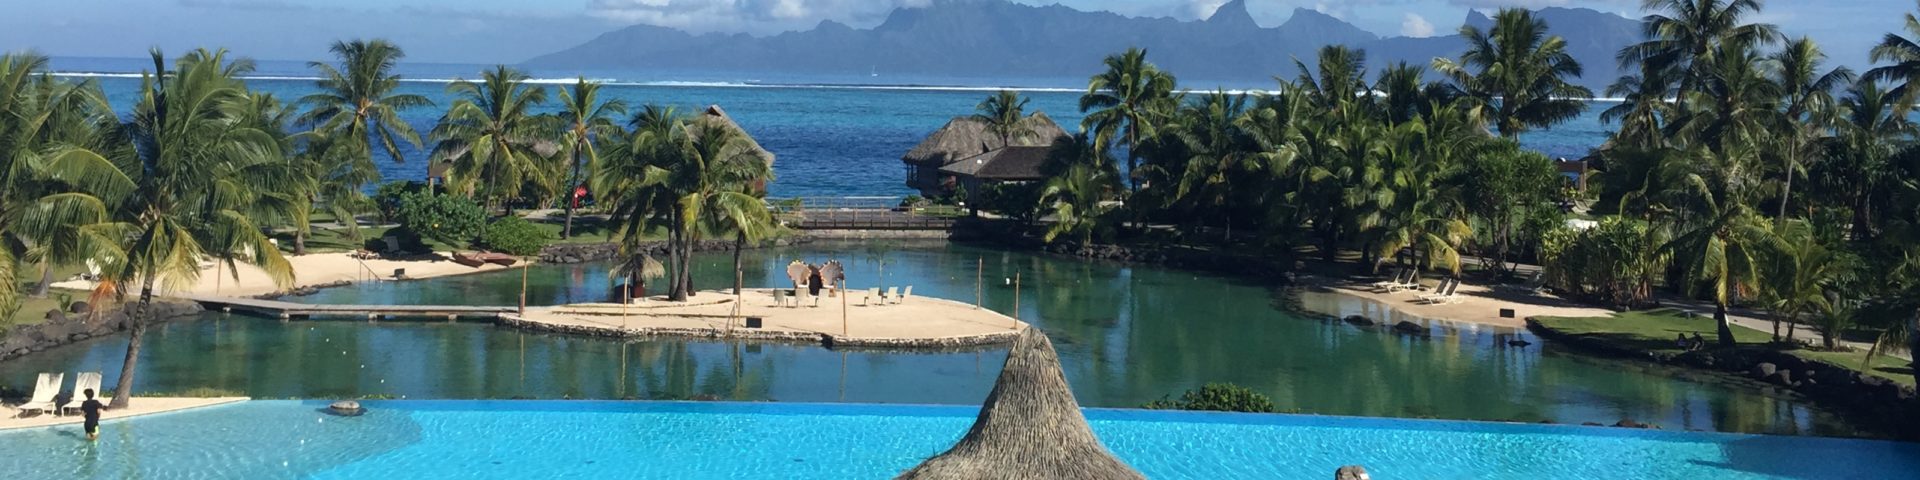 InterContinental Tahiti Pool